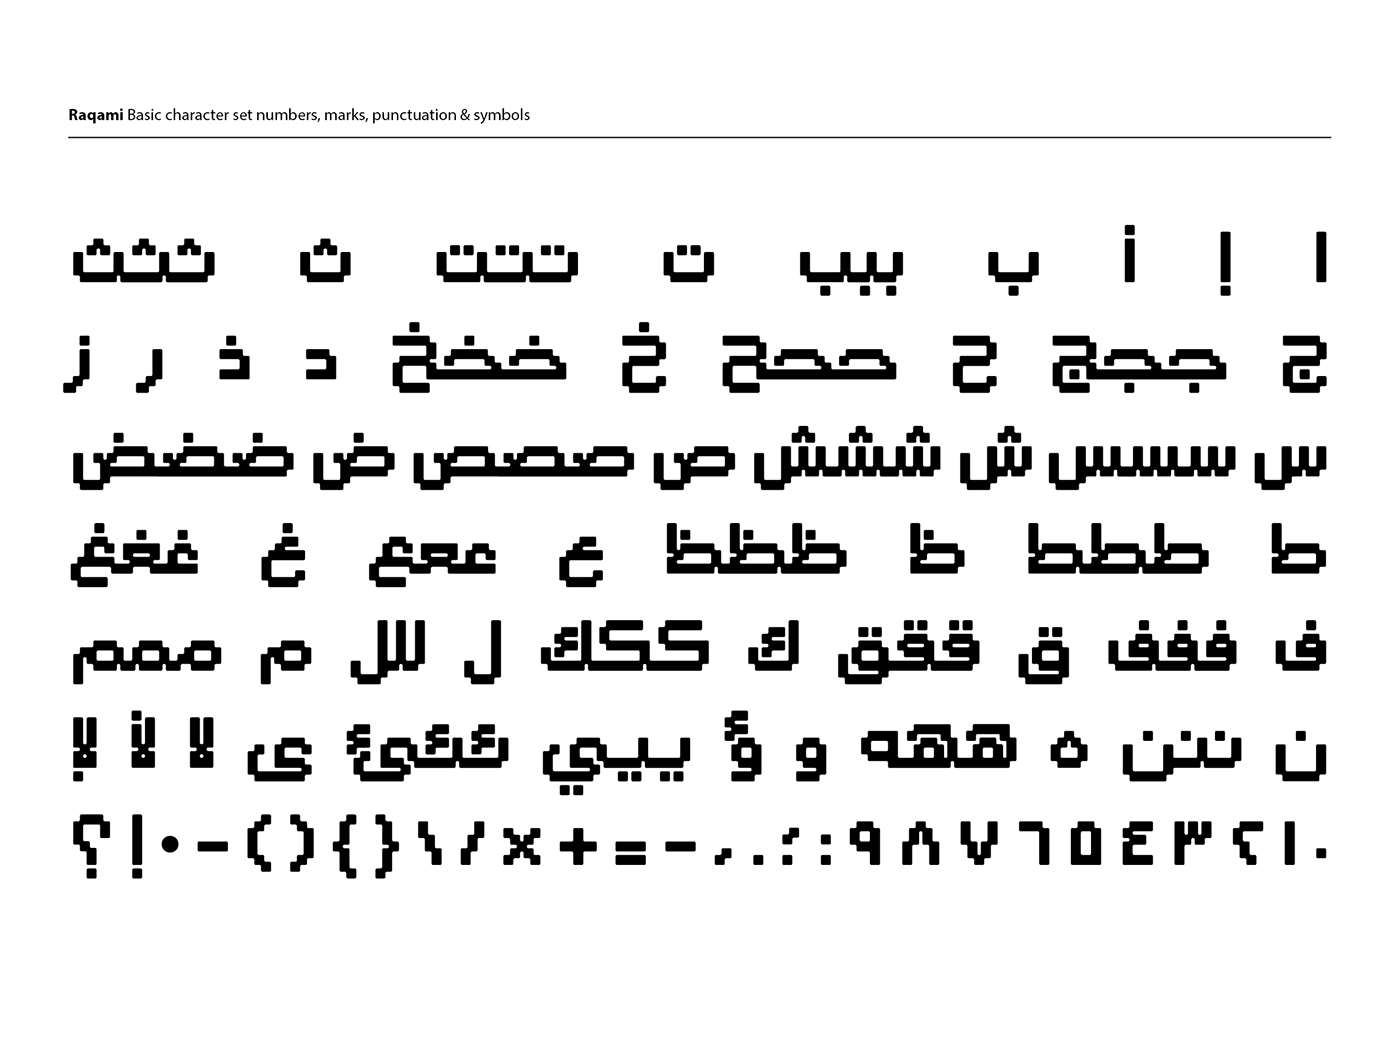 arabic font digital raqami   عربي فونت   كتابة رقمي   مبتكر   خط typography  